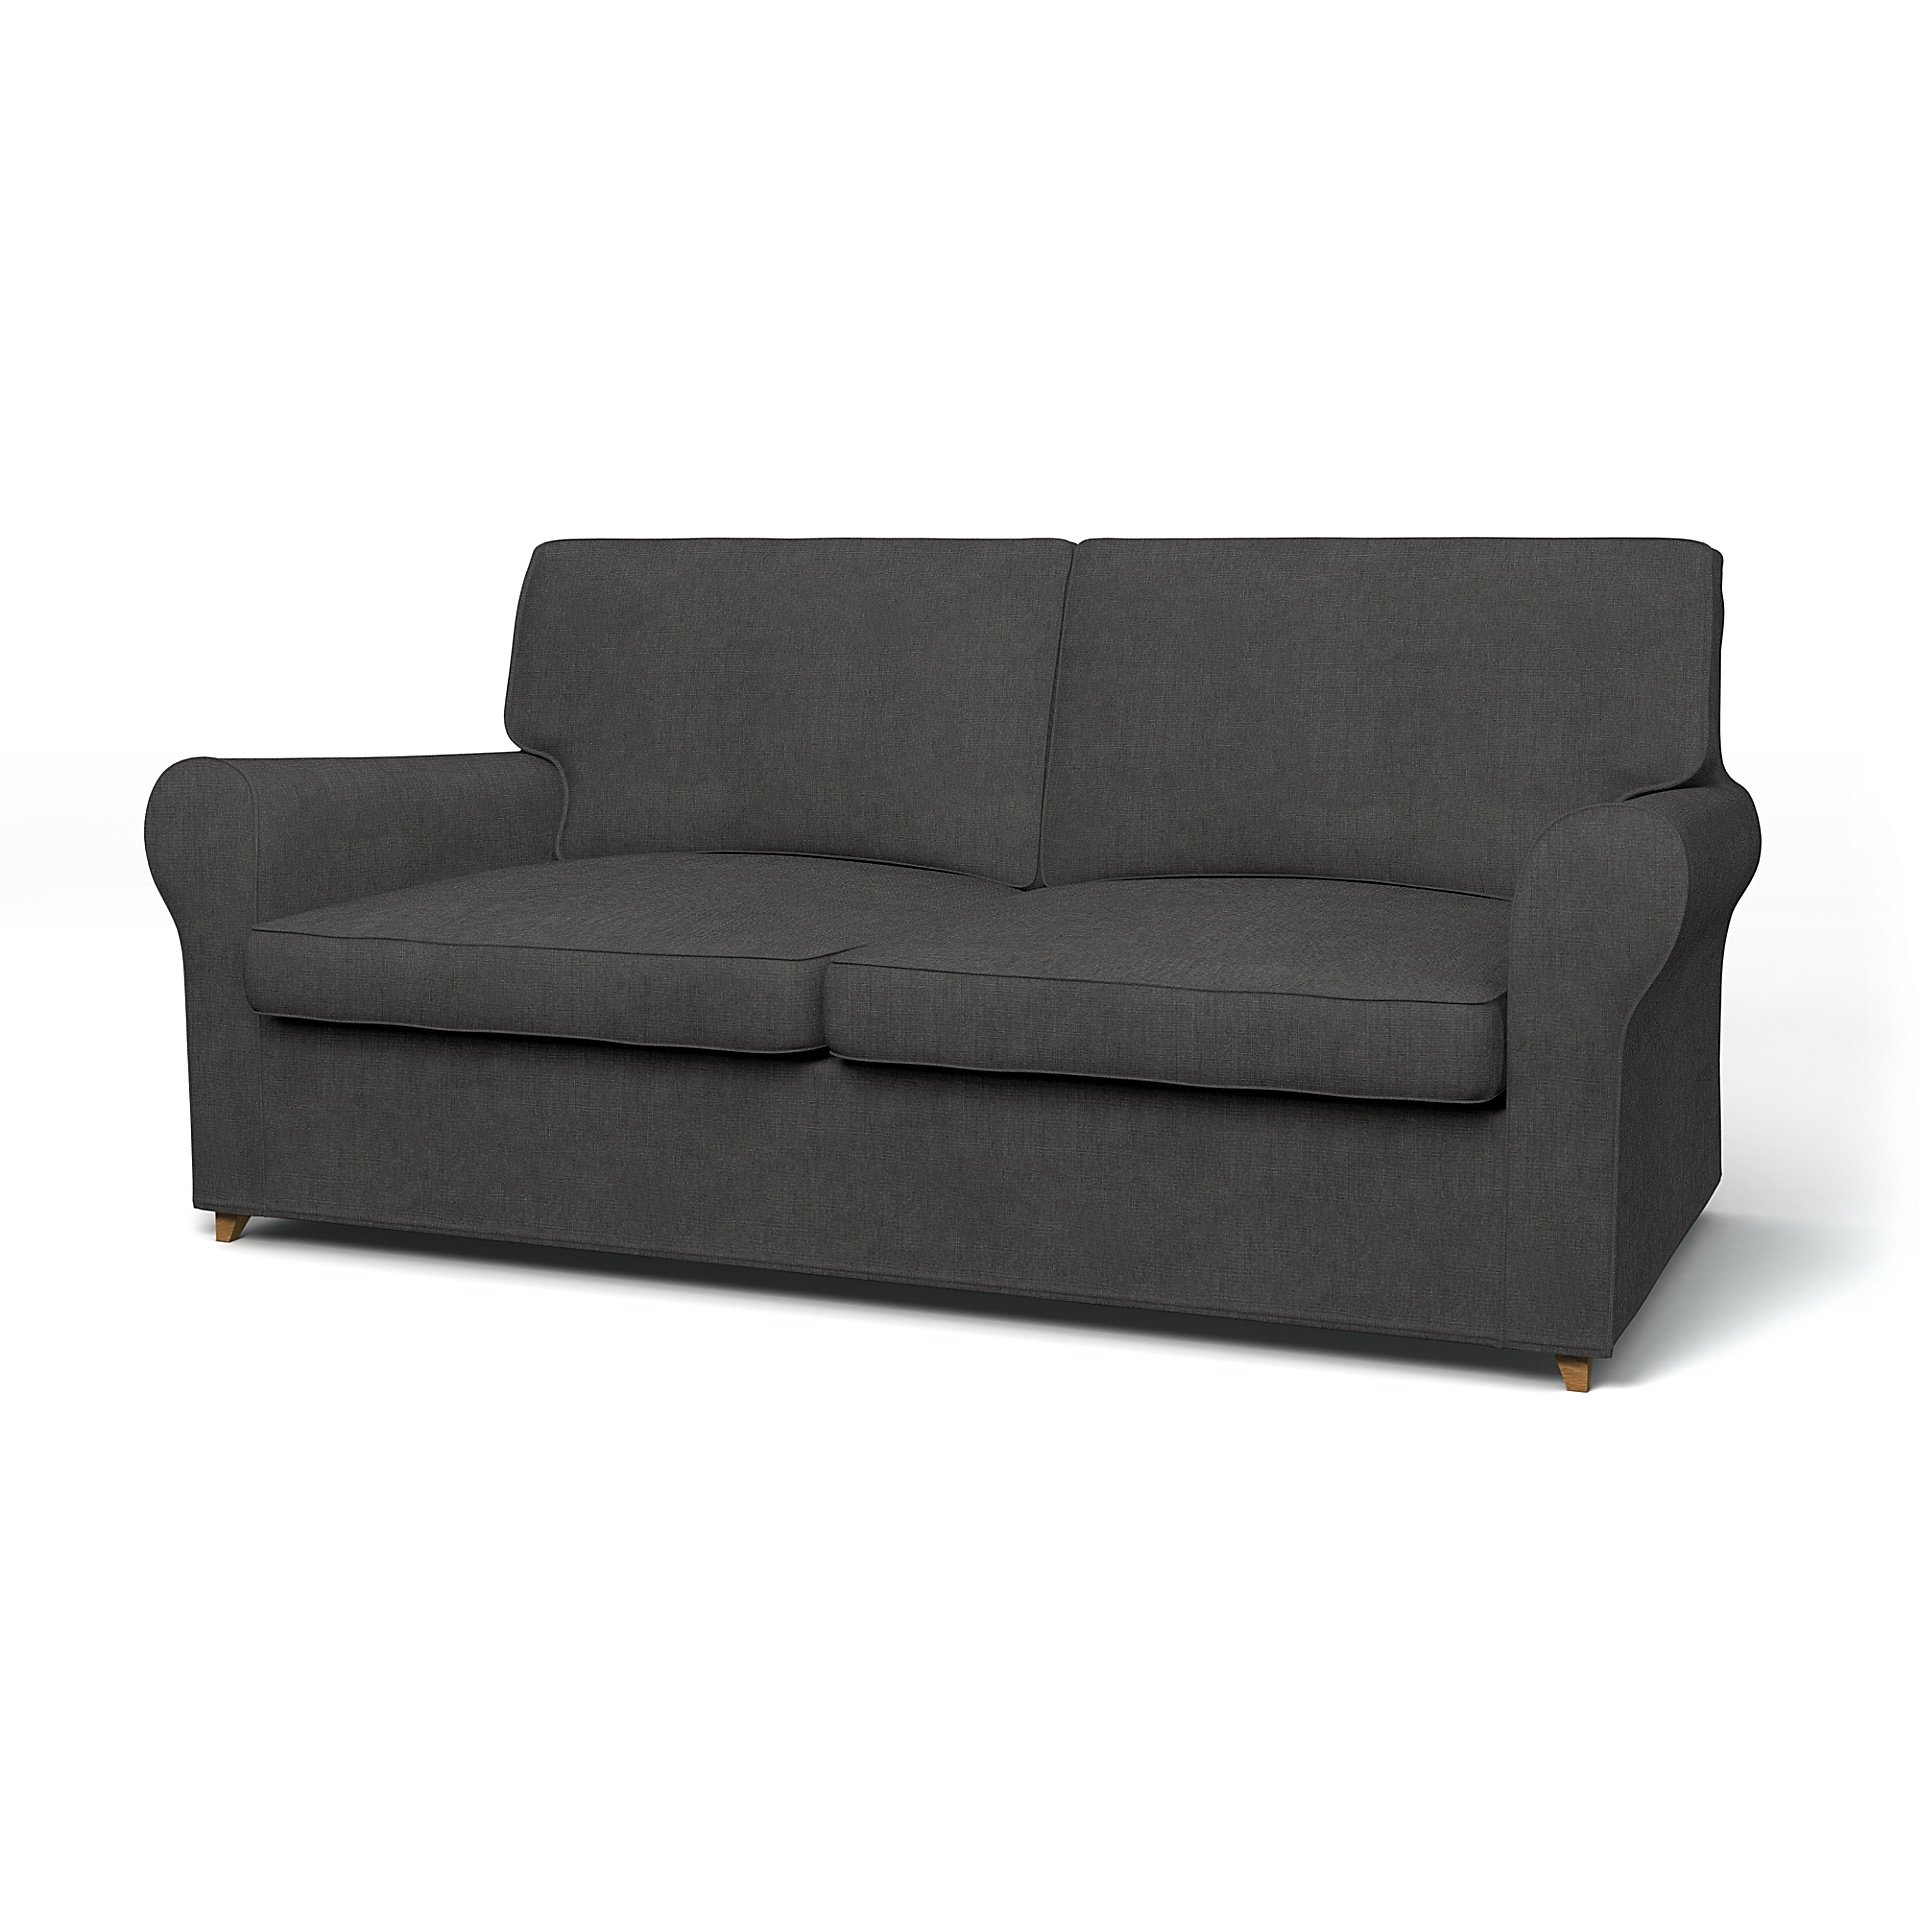 IKEA - Angby Sofa Bed Cover, Espresso, Linen - Bemz